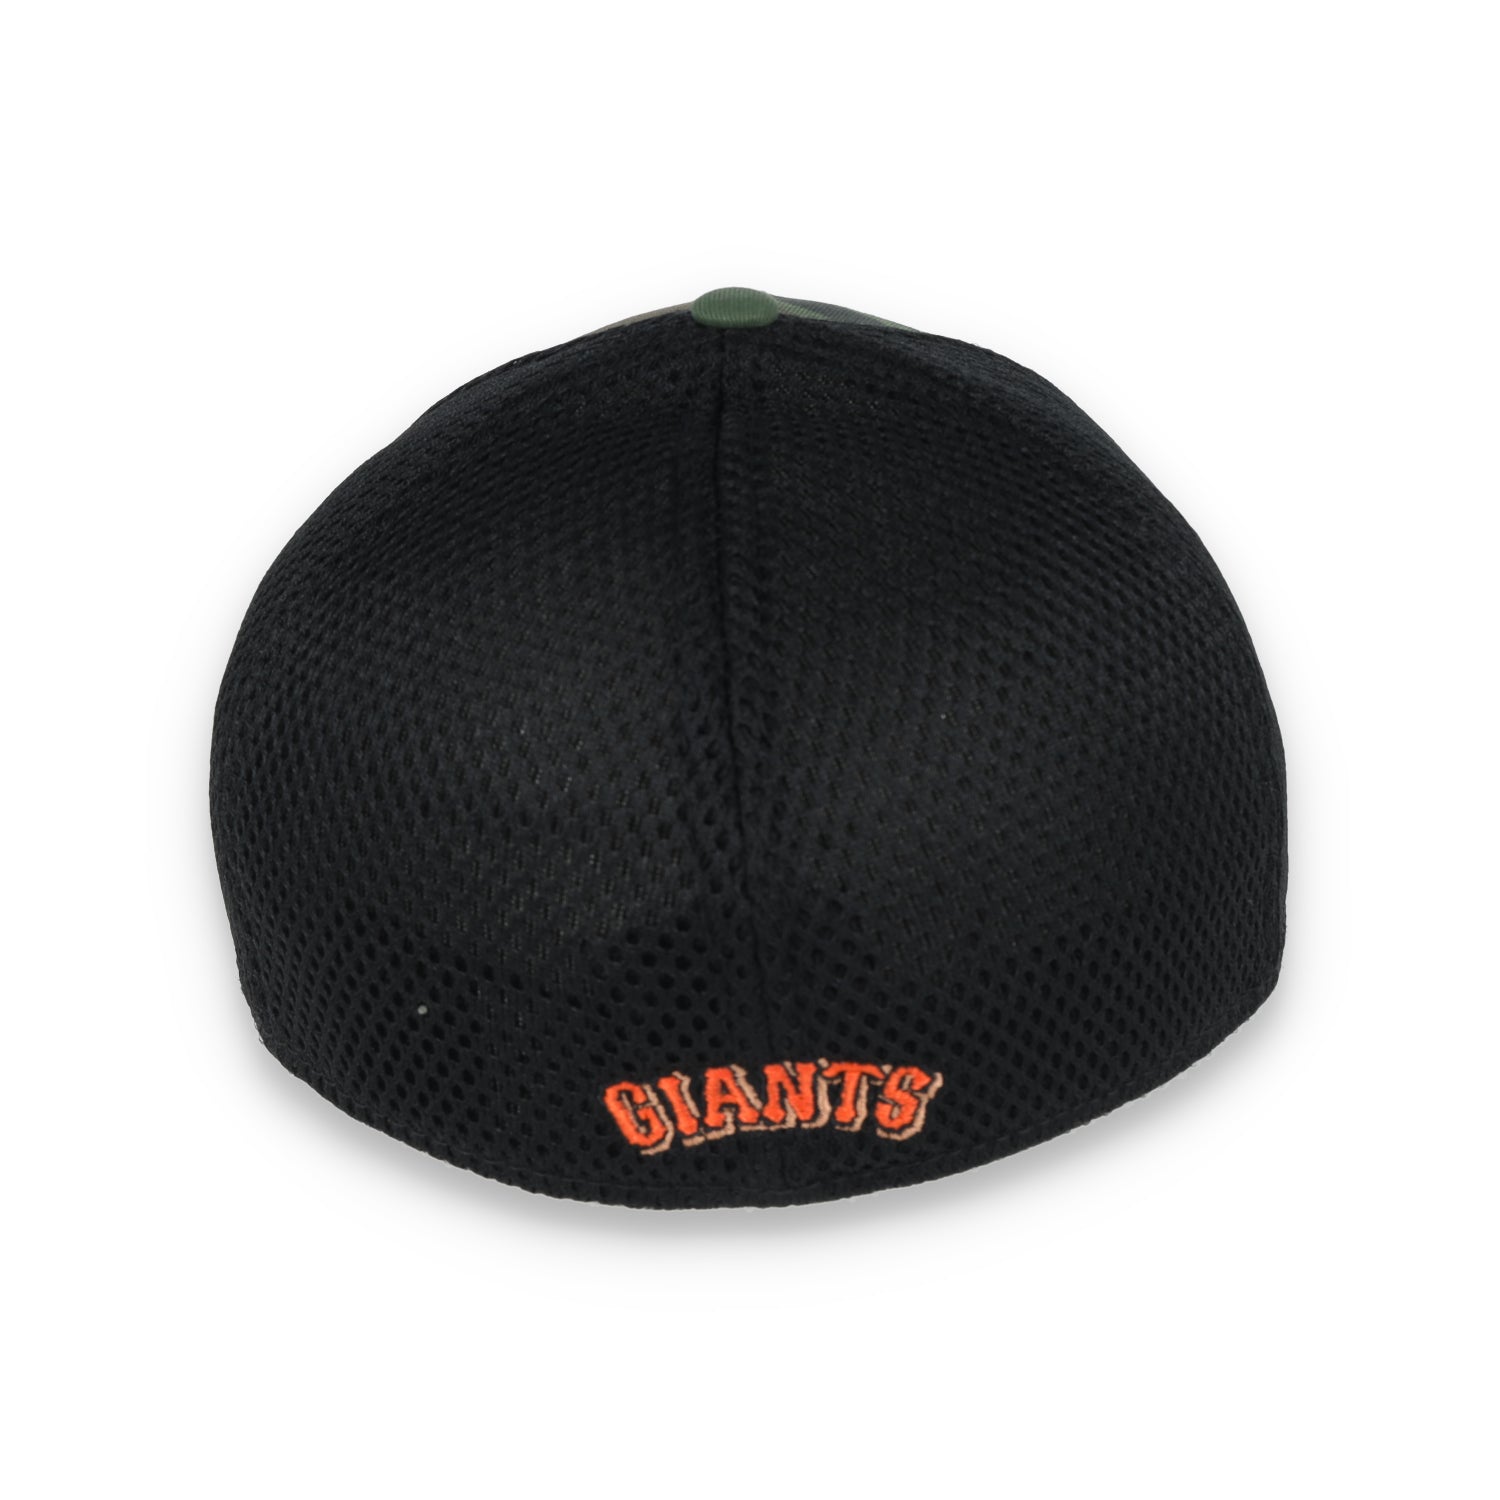 New Era San Francisco Giants Shadow Neo 39THIRTY Flex Hat – Camo